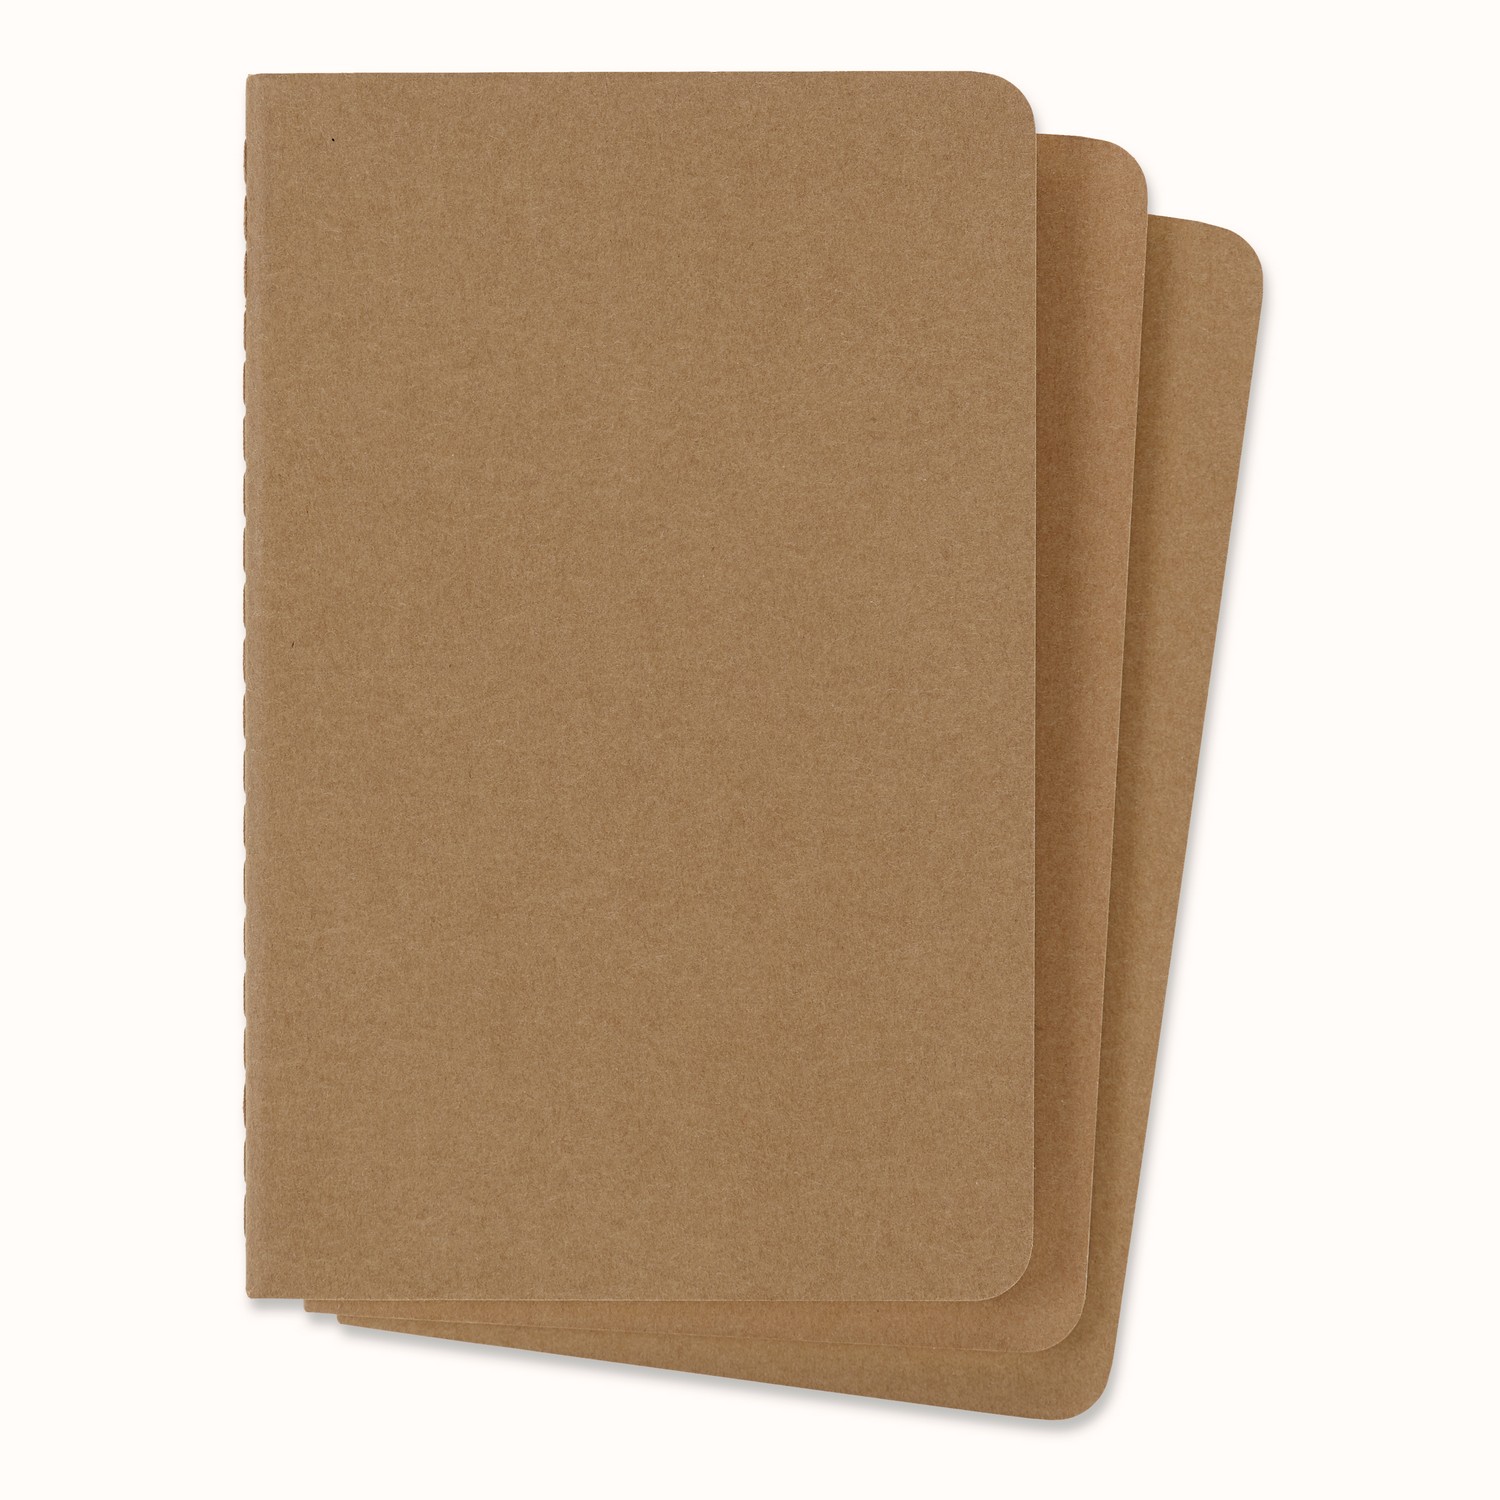 Moleskine Cahier Journal (Set of 3) Ruled Soft Cover